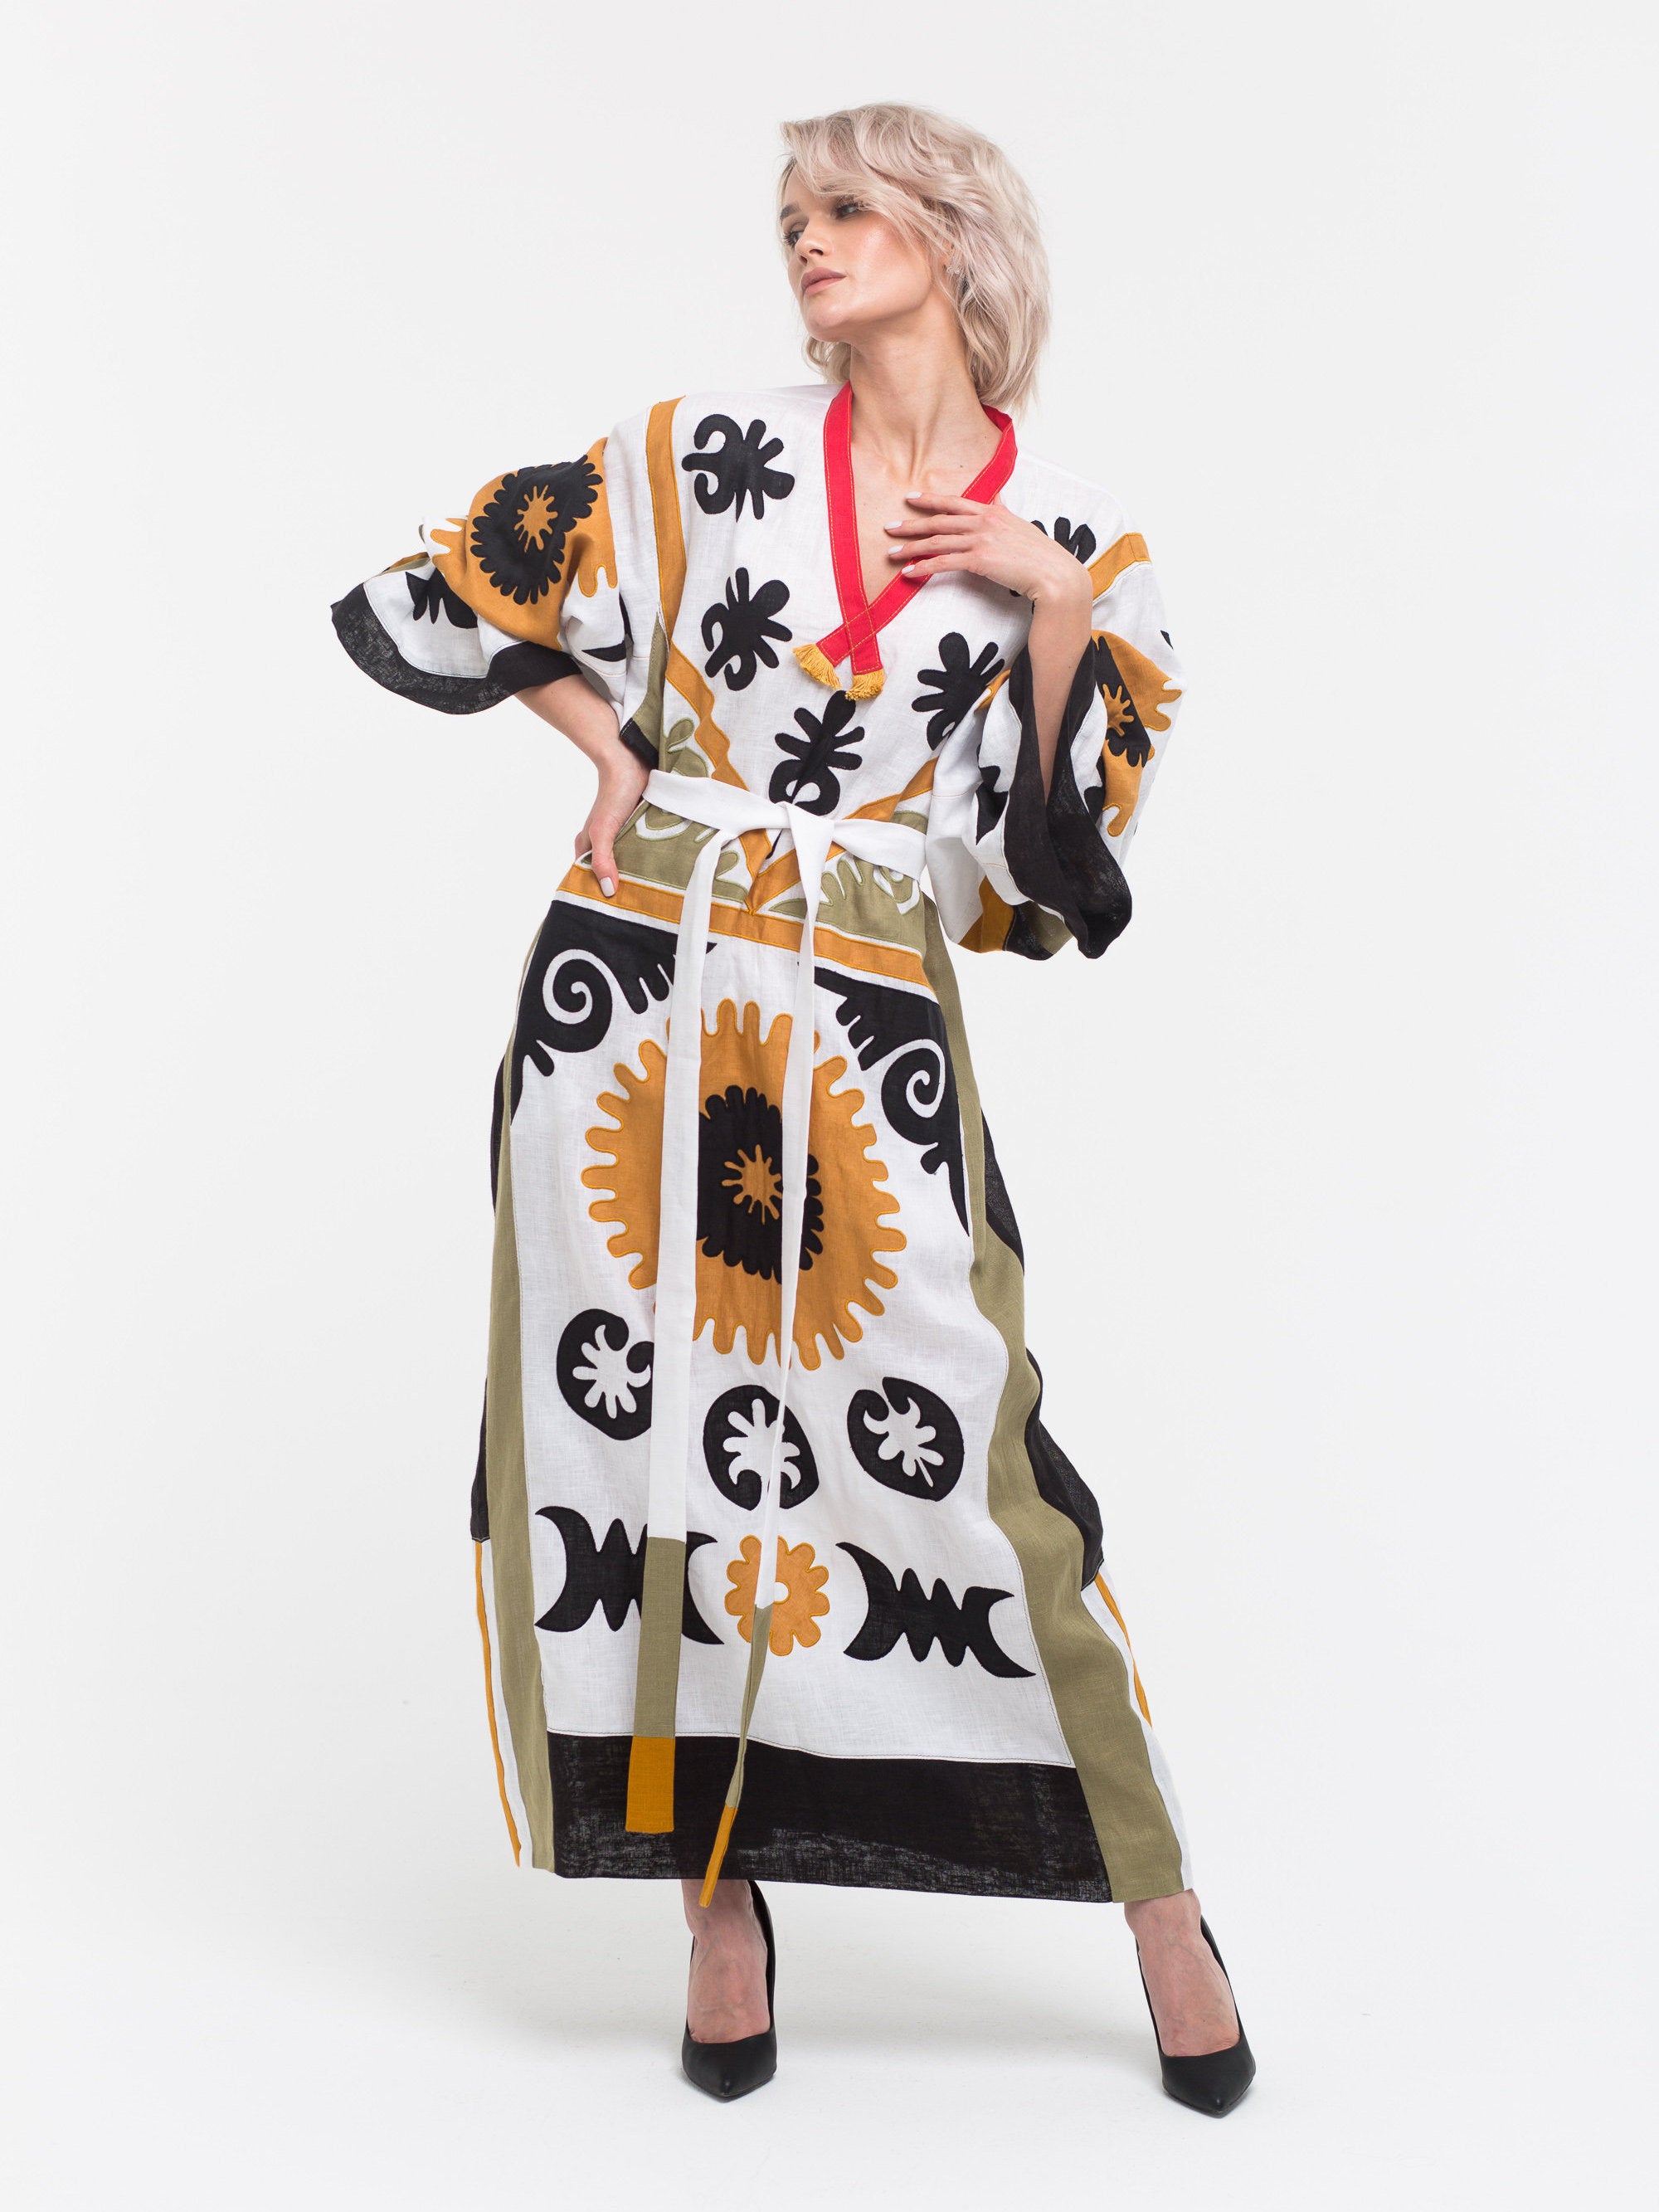 Oversize embroidered linen robe Fashion ethnic applique kaftan